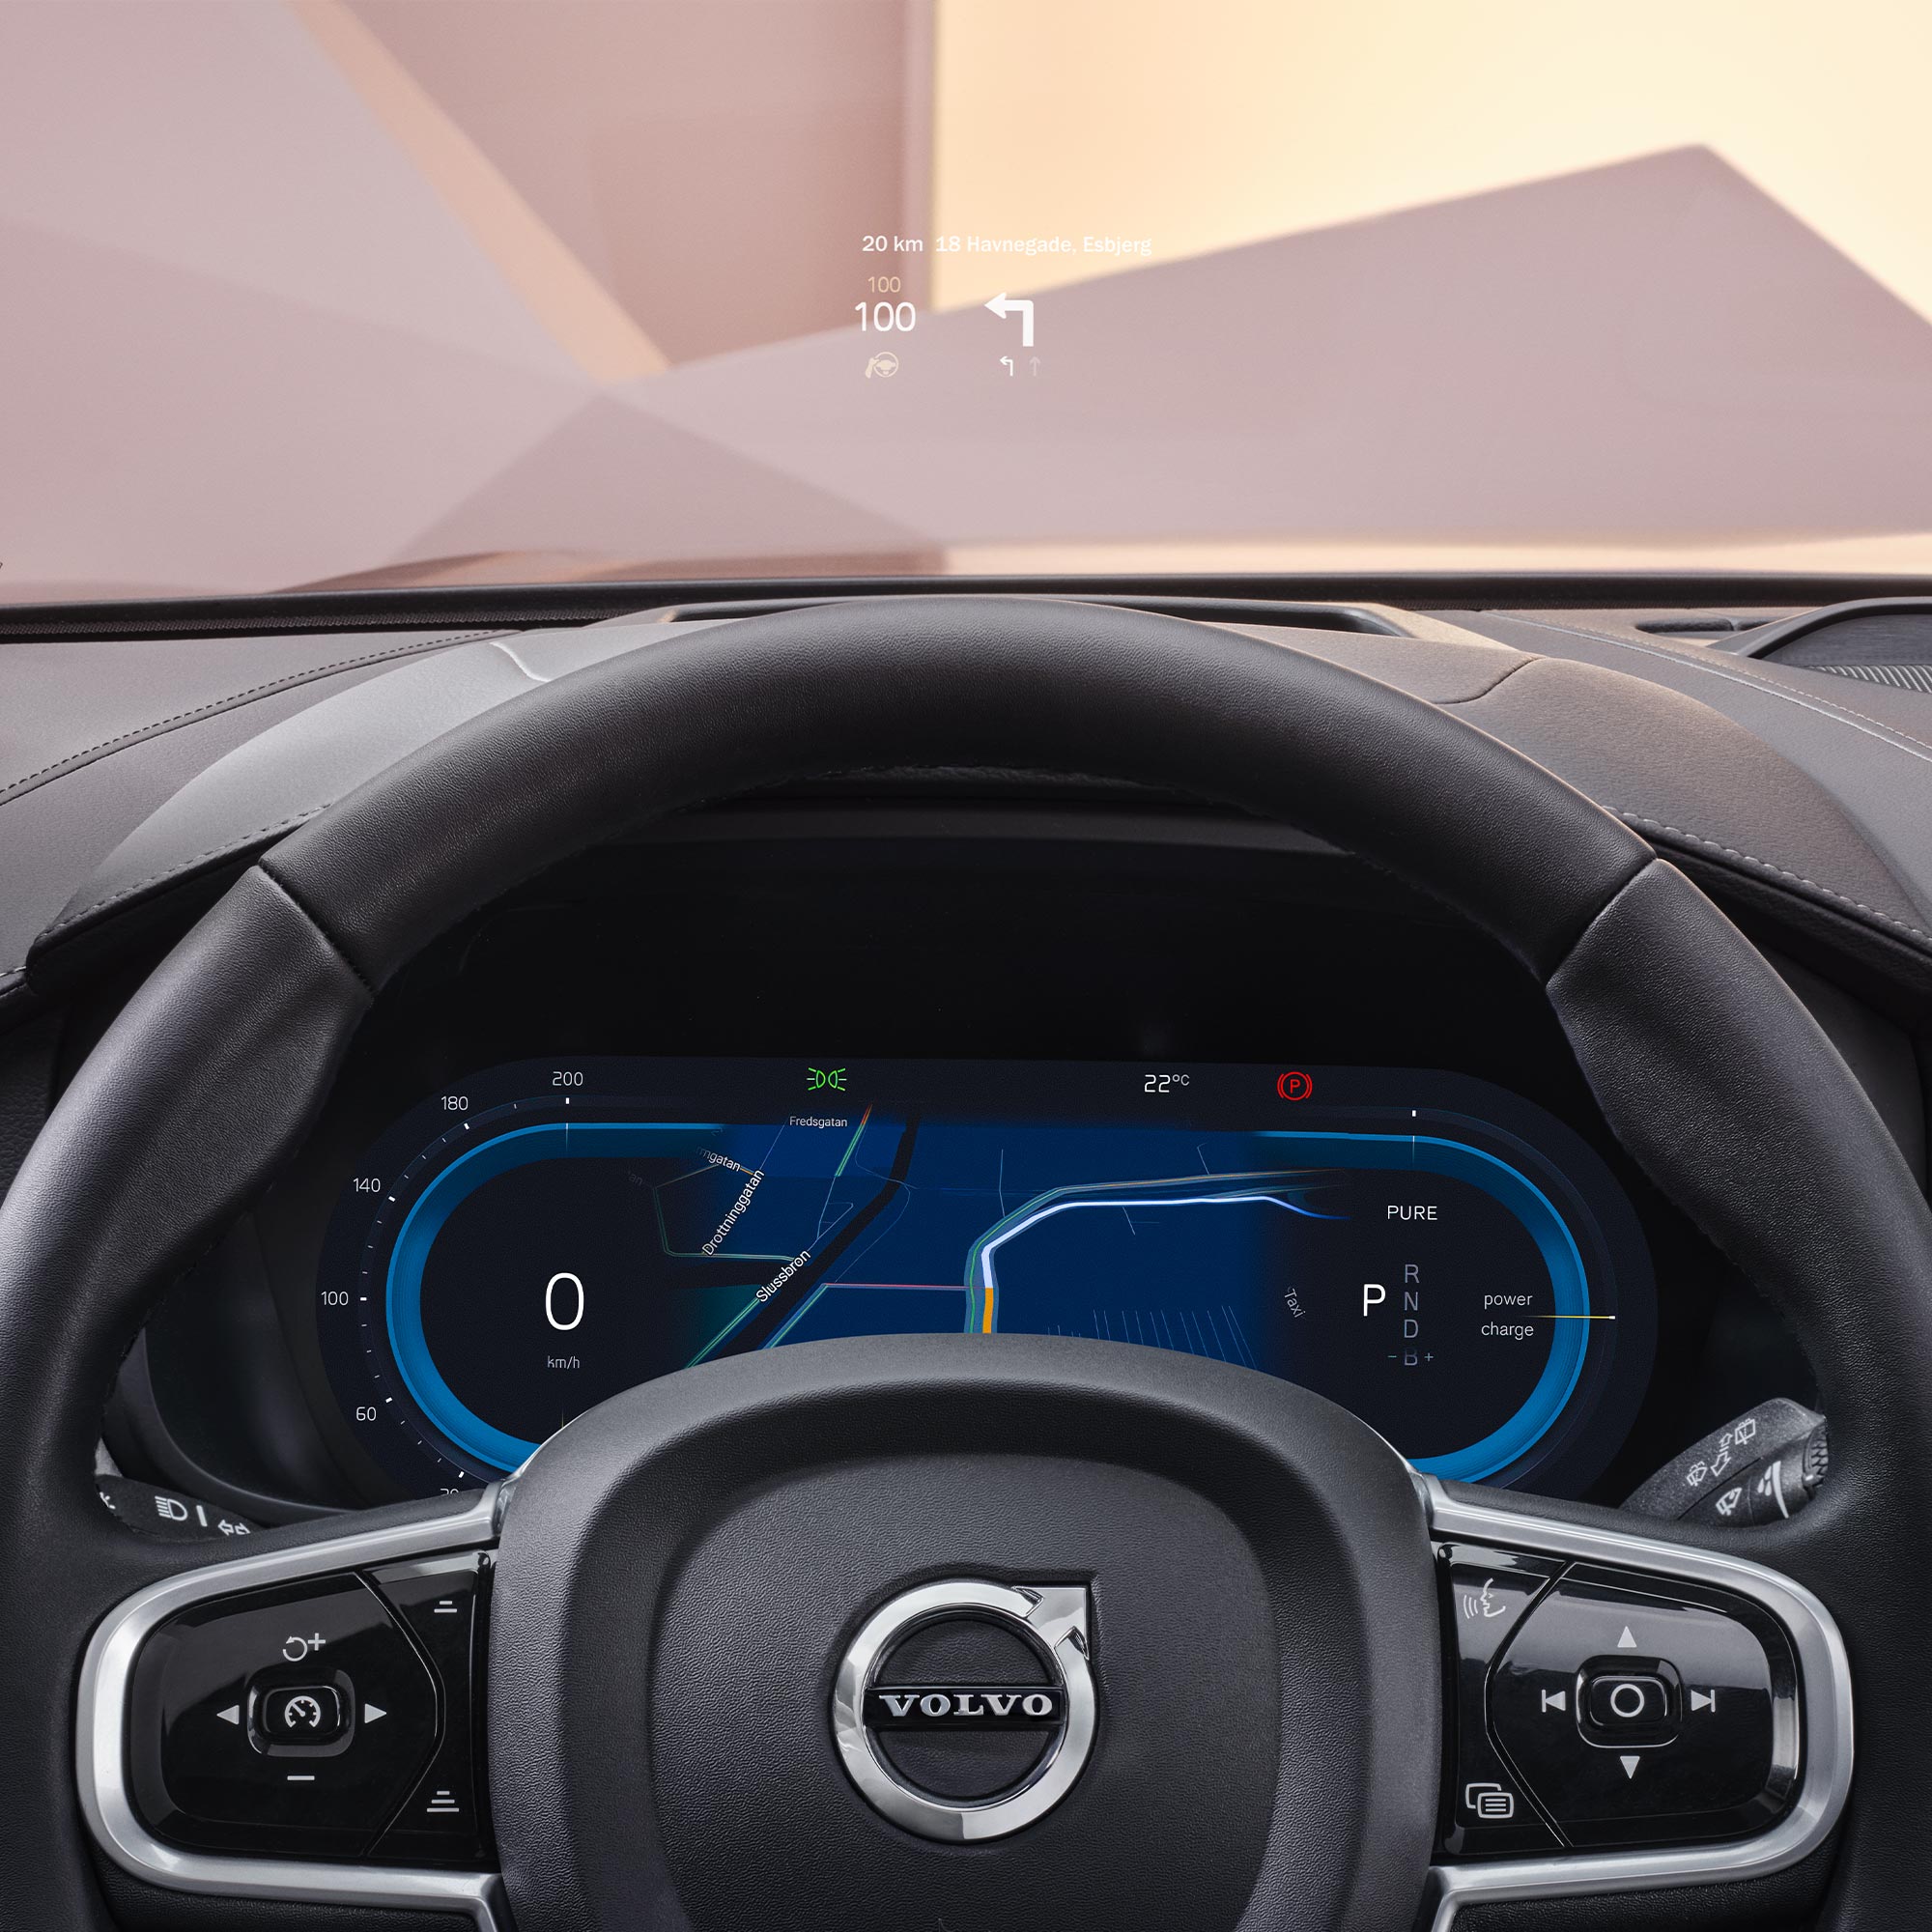 Blick vom Fahrersitz auf Lenkrad und Fahrerdisplay des Volvo V90 Recharge Plug-in Hybrid.